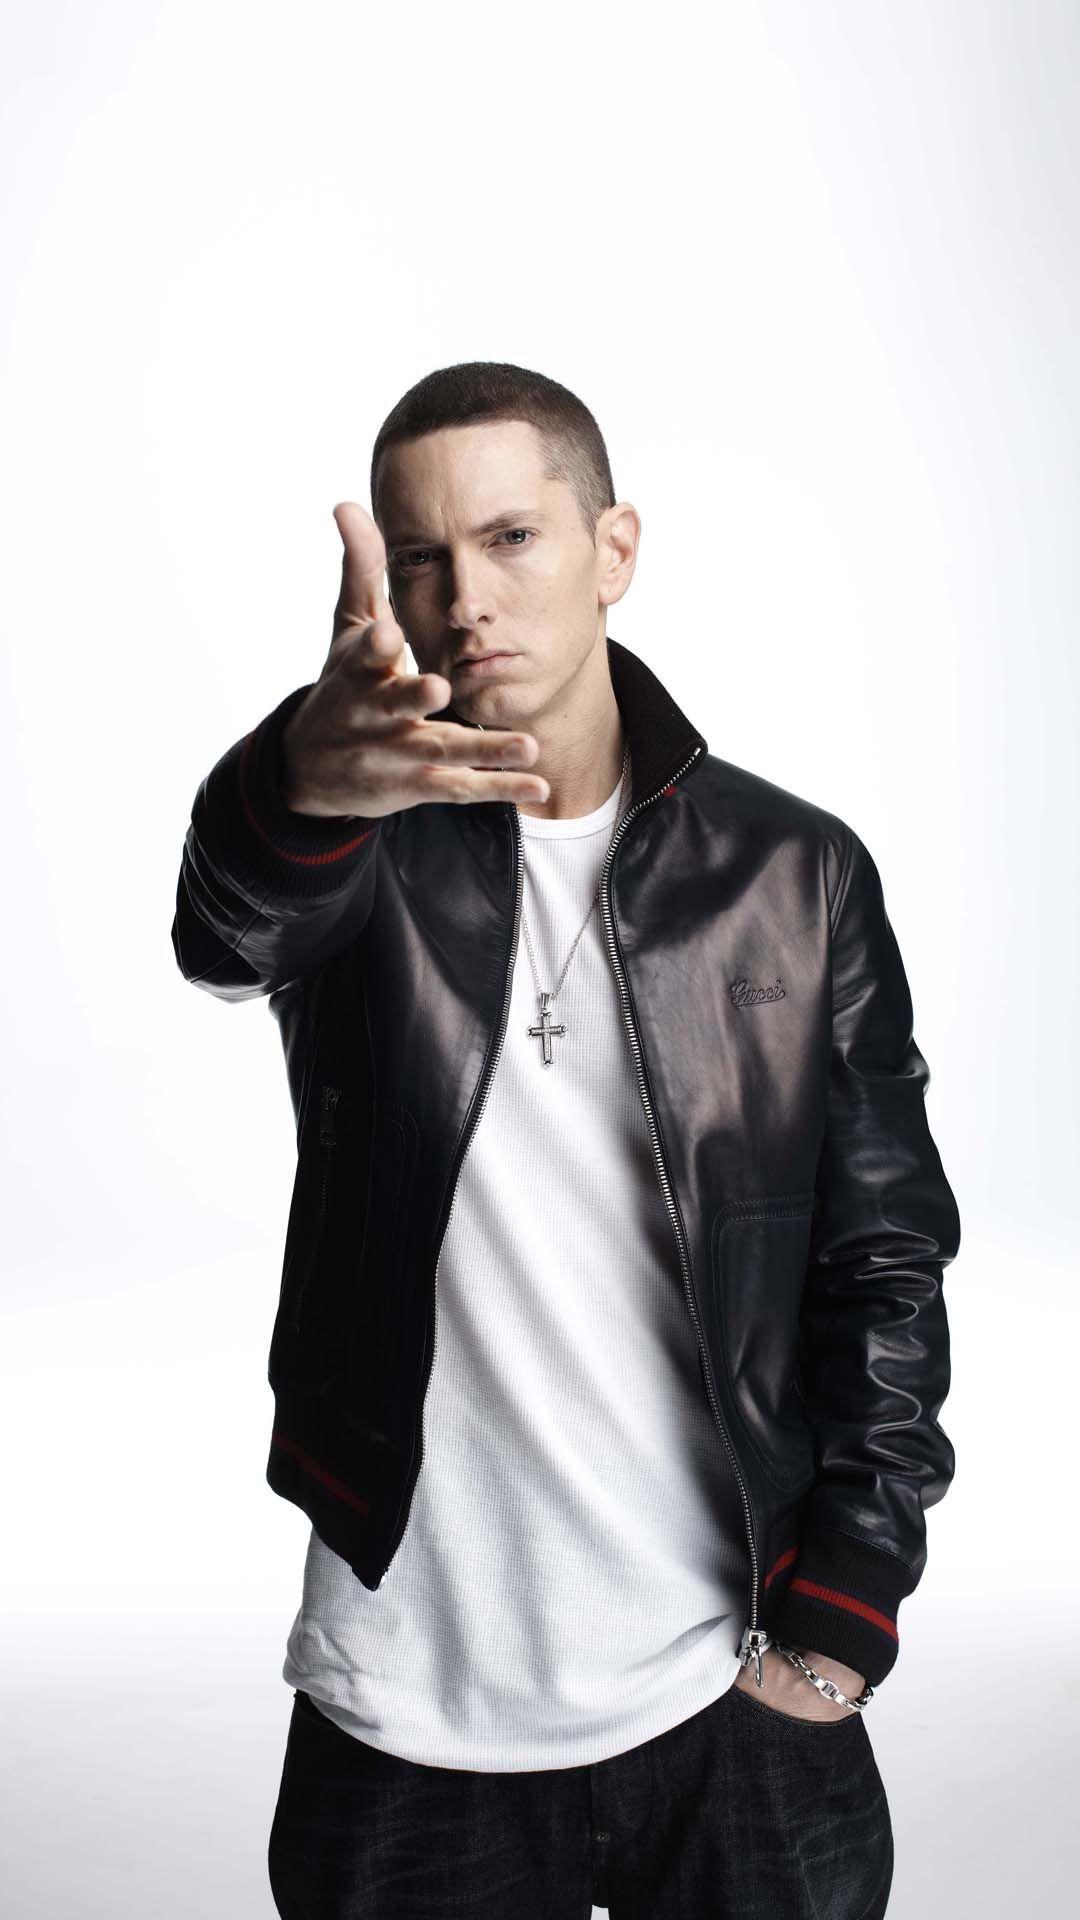 Eminem Phone Wallpapers - Top Free ...